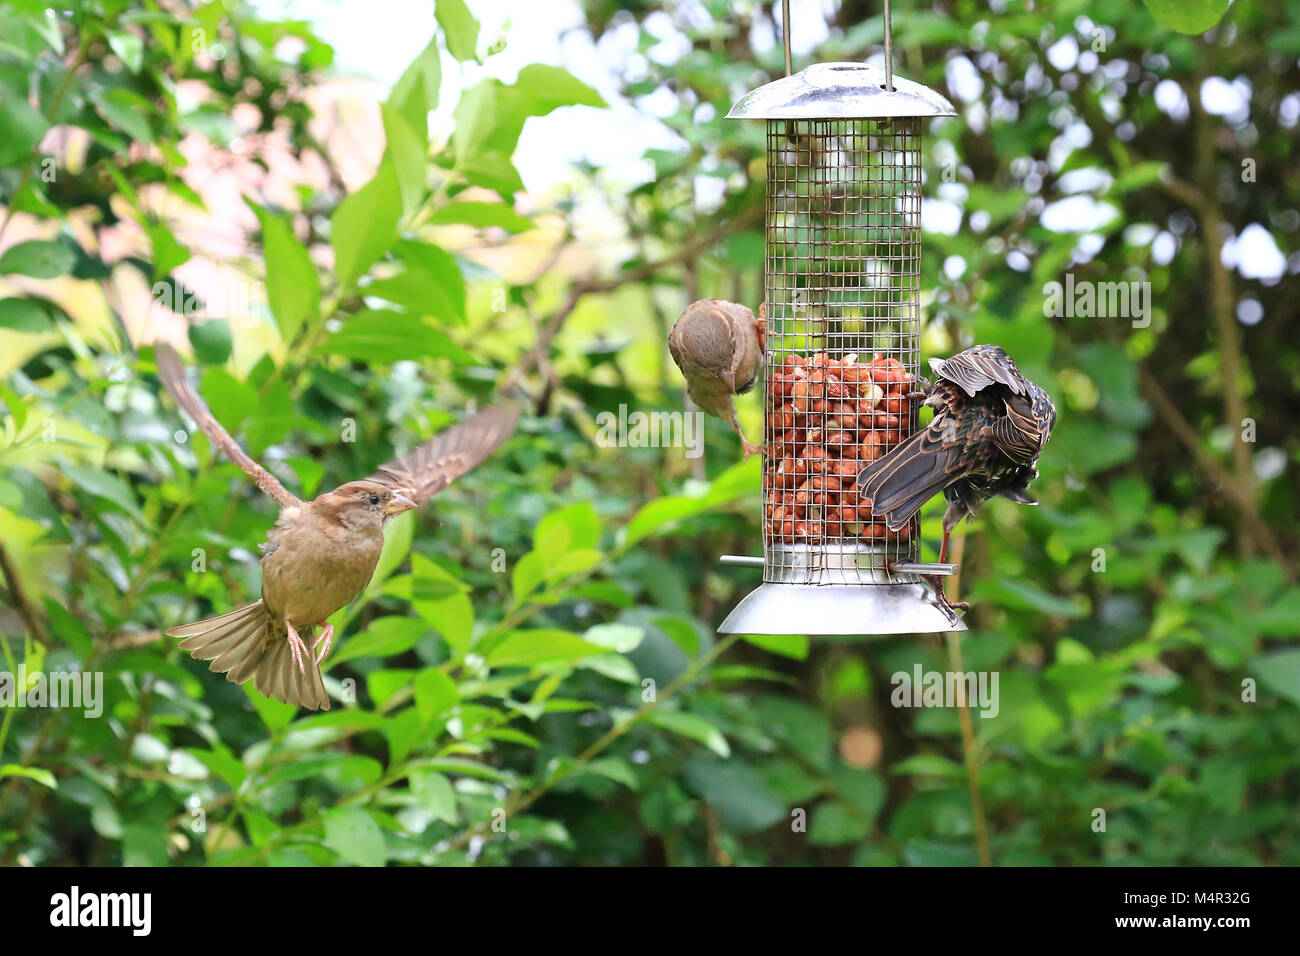 Garden Birds hungrily devouring peanuts from a garden bird feeder. Stock Photo